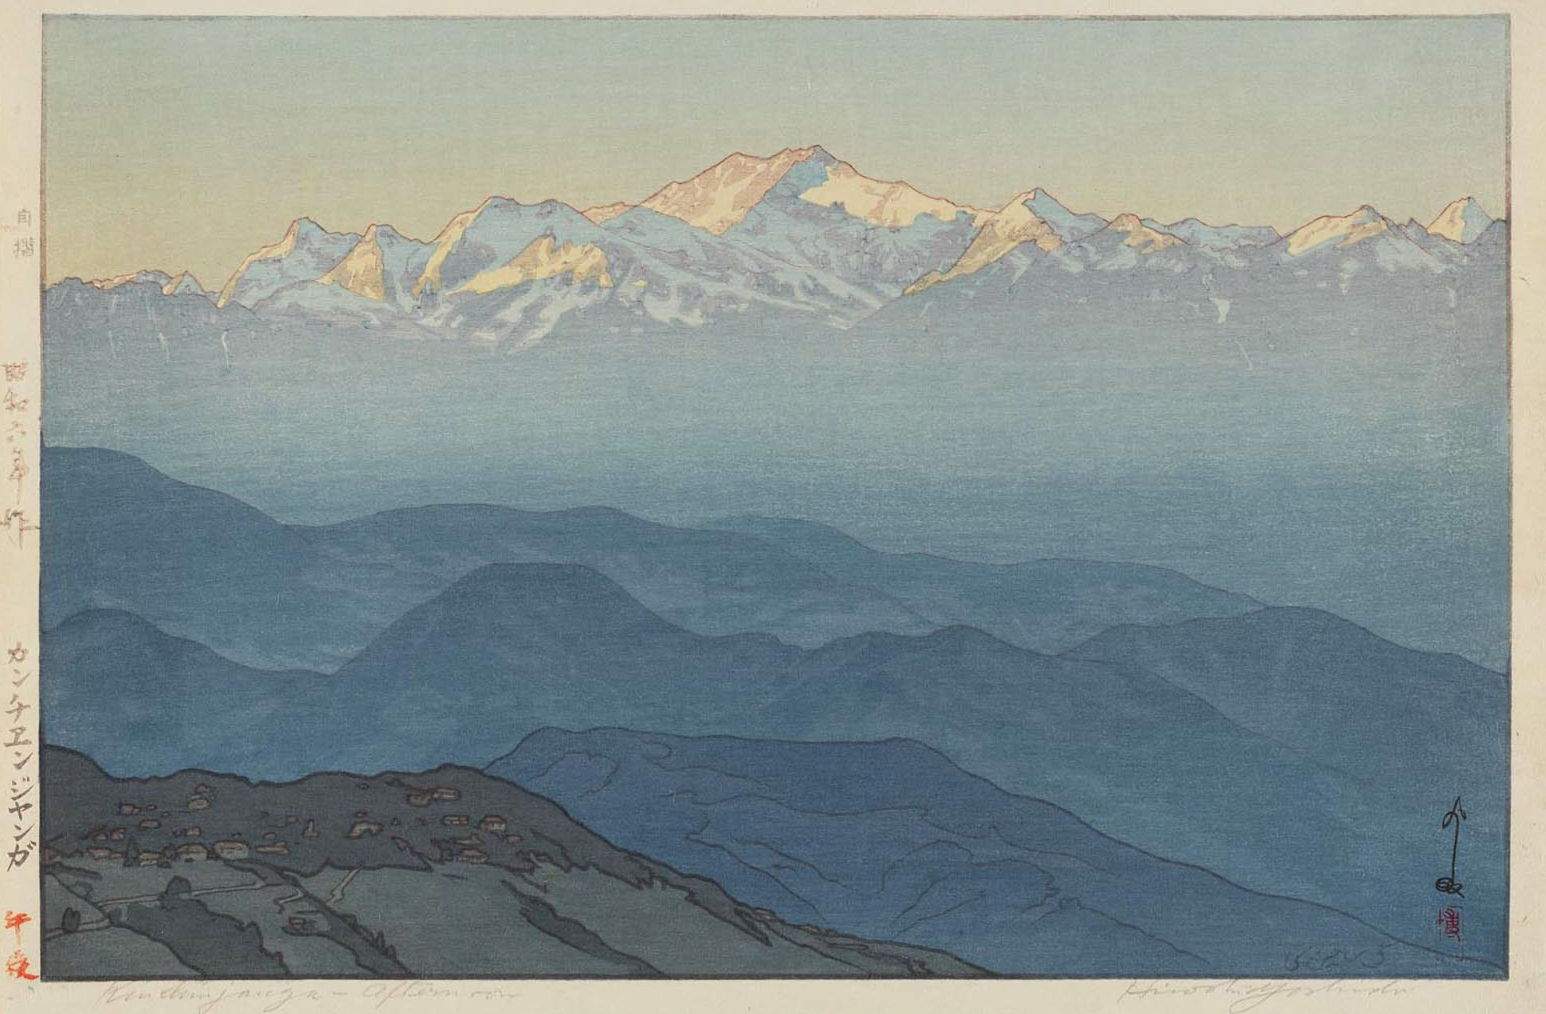 Hiroshi Yoshida “Kanchenjunga - Afternoon” 1931 woodblock print